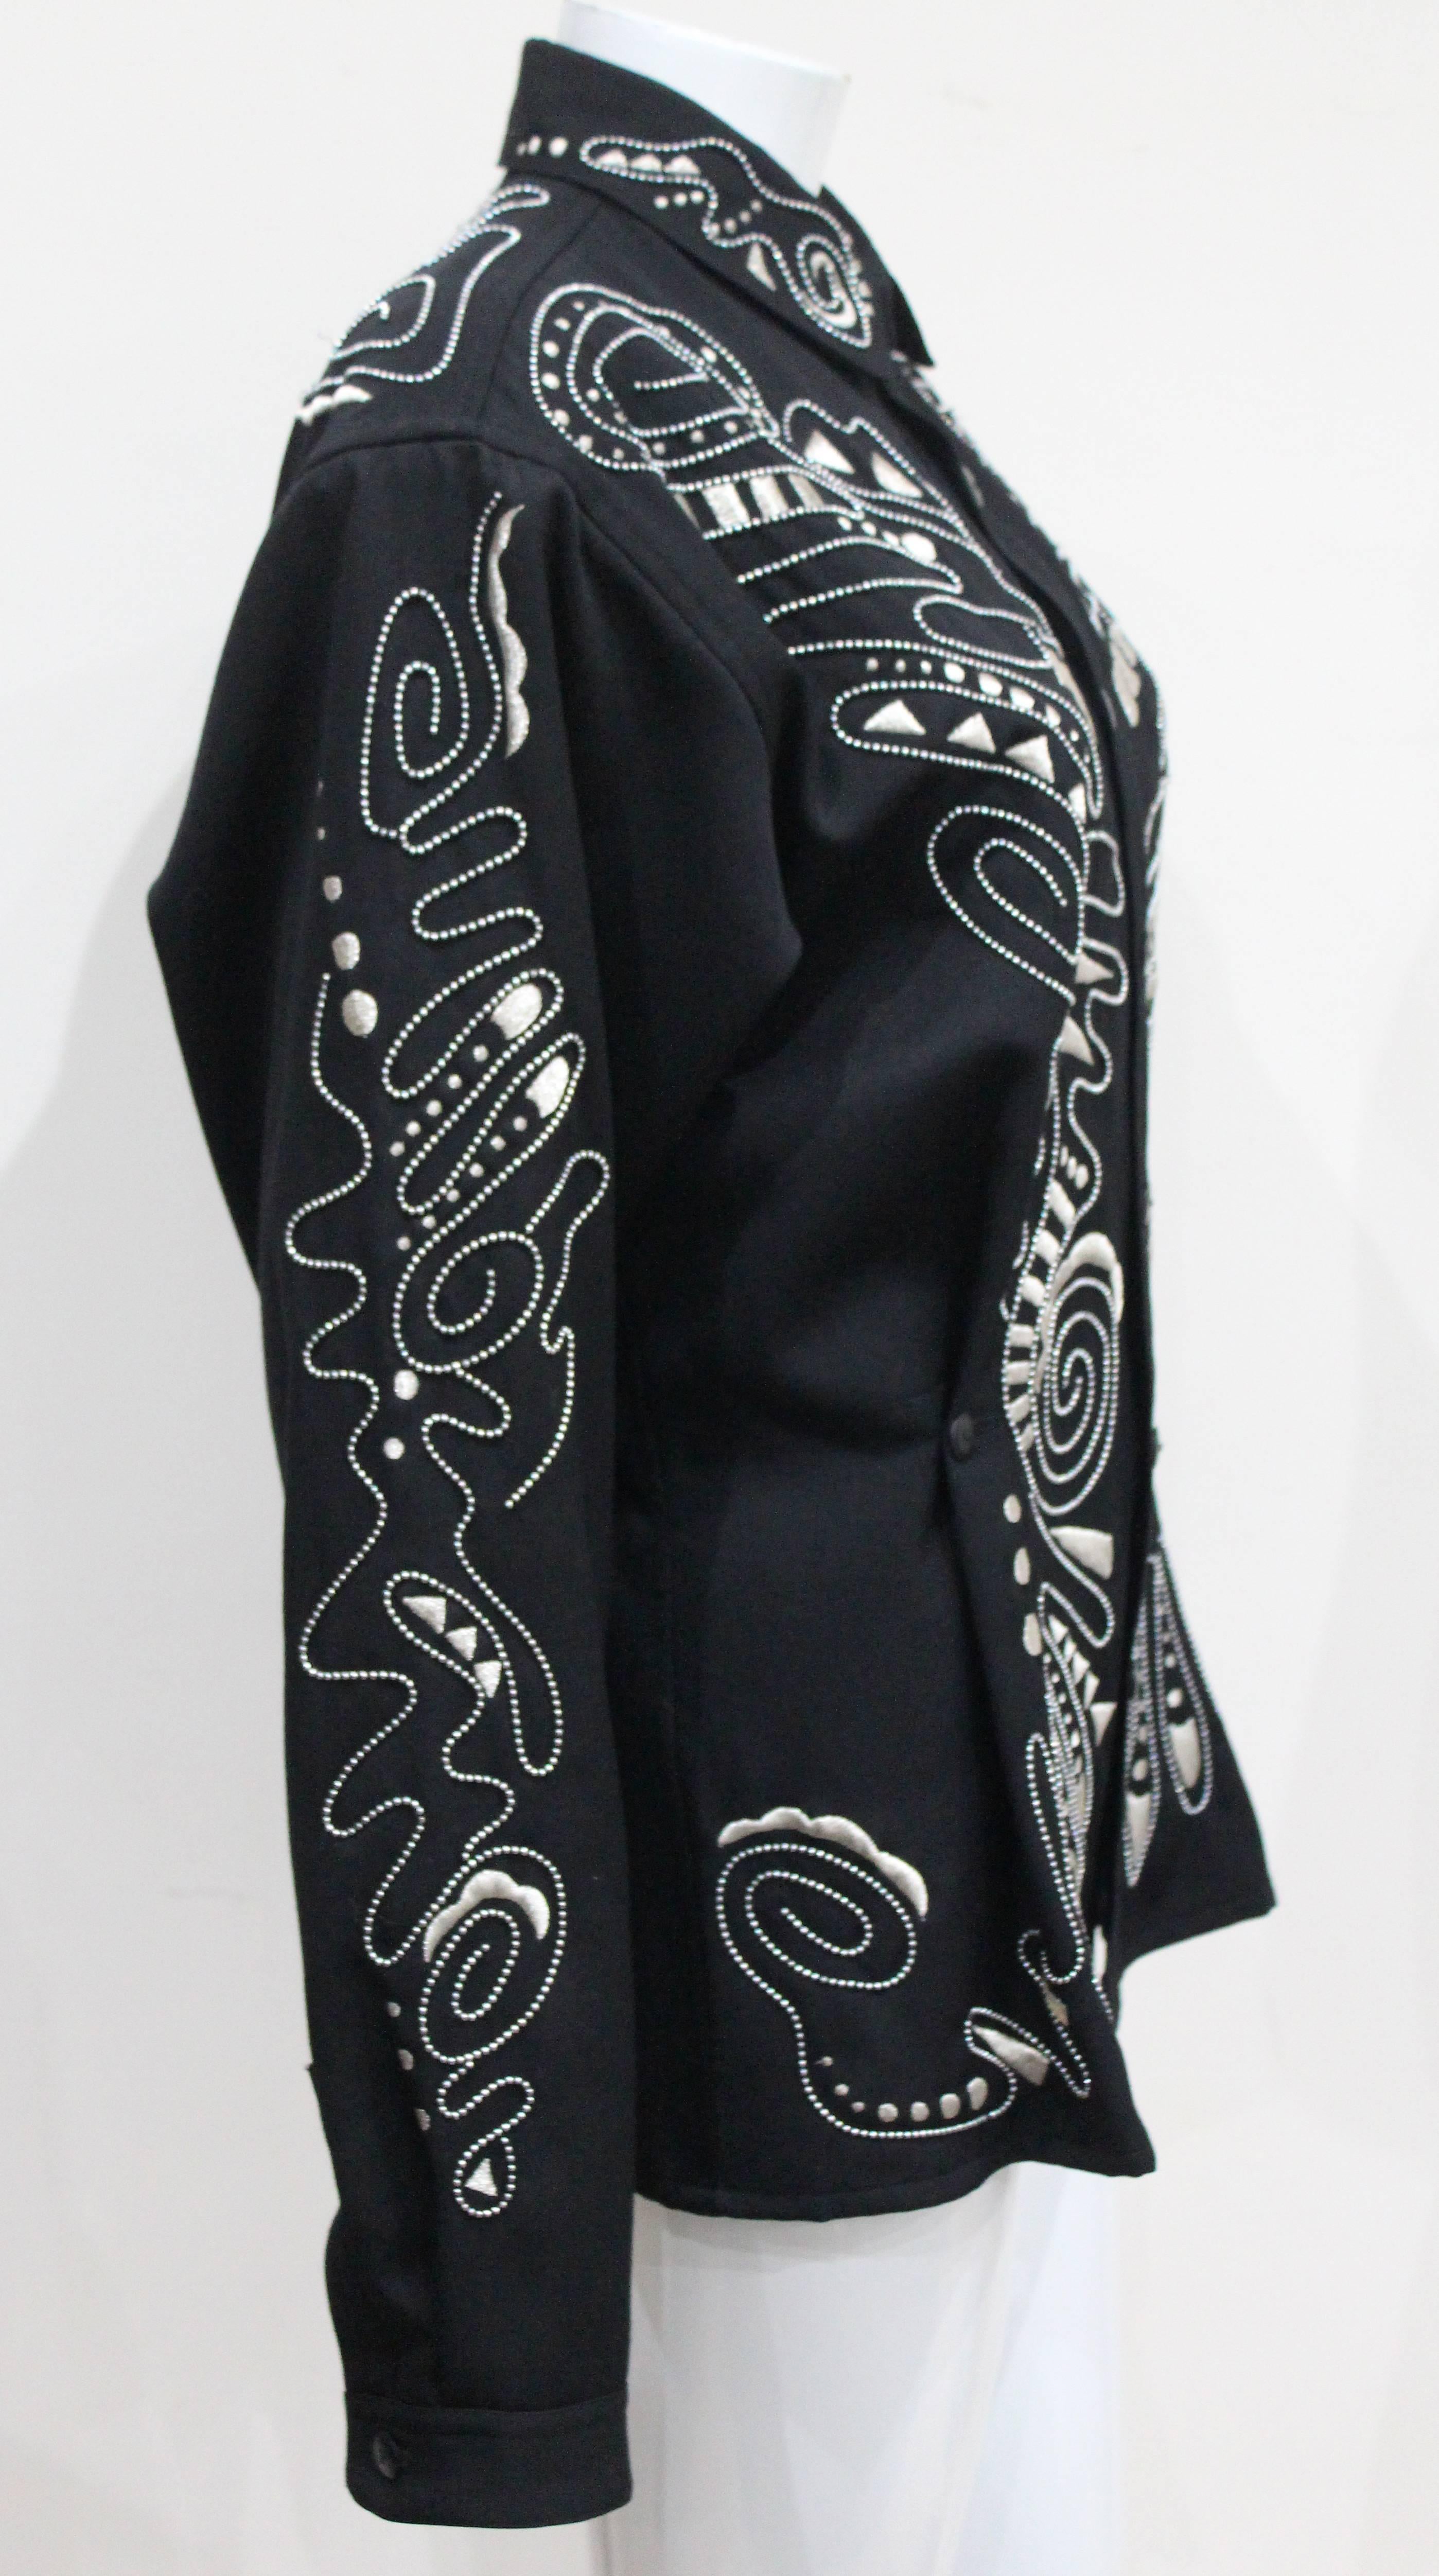 A rare Kansai Yamamoto black tailored jacket with silver embellishment throughout. 

Size: S/M